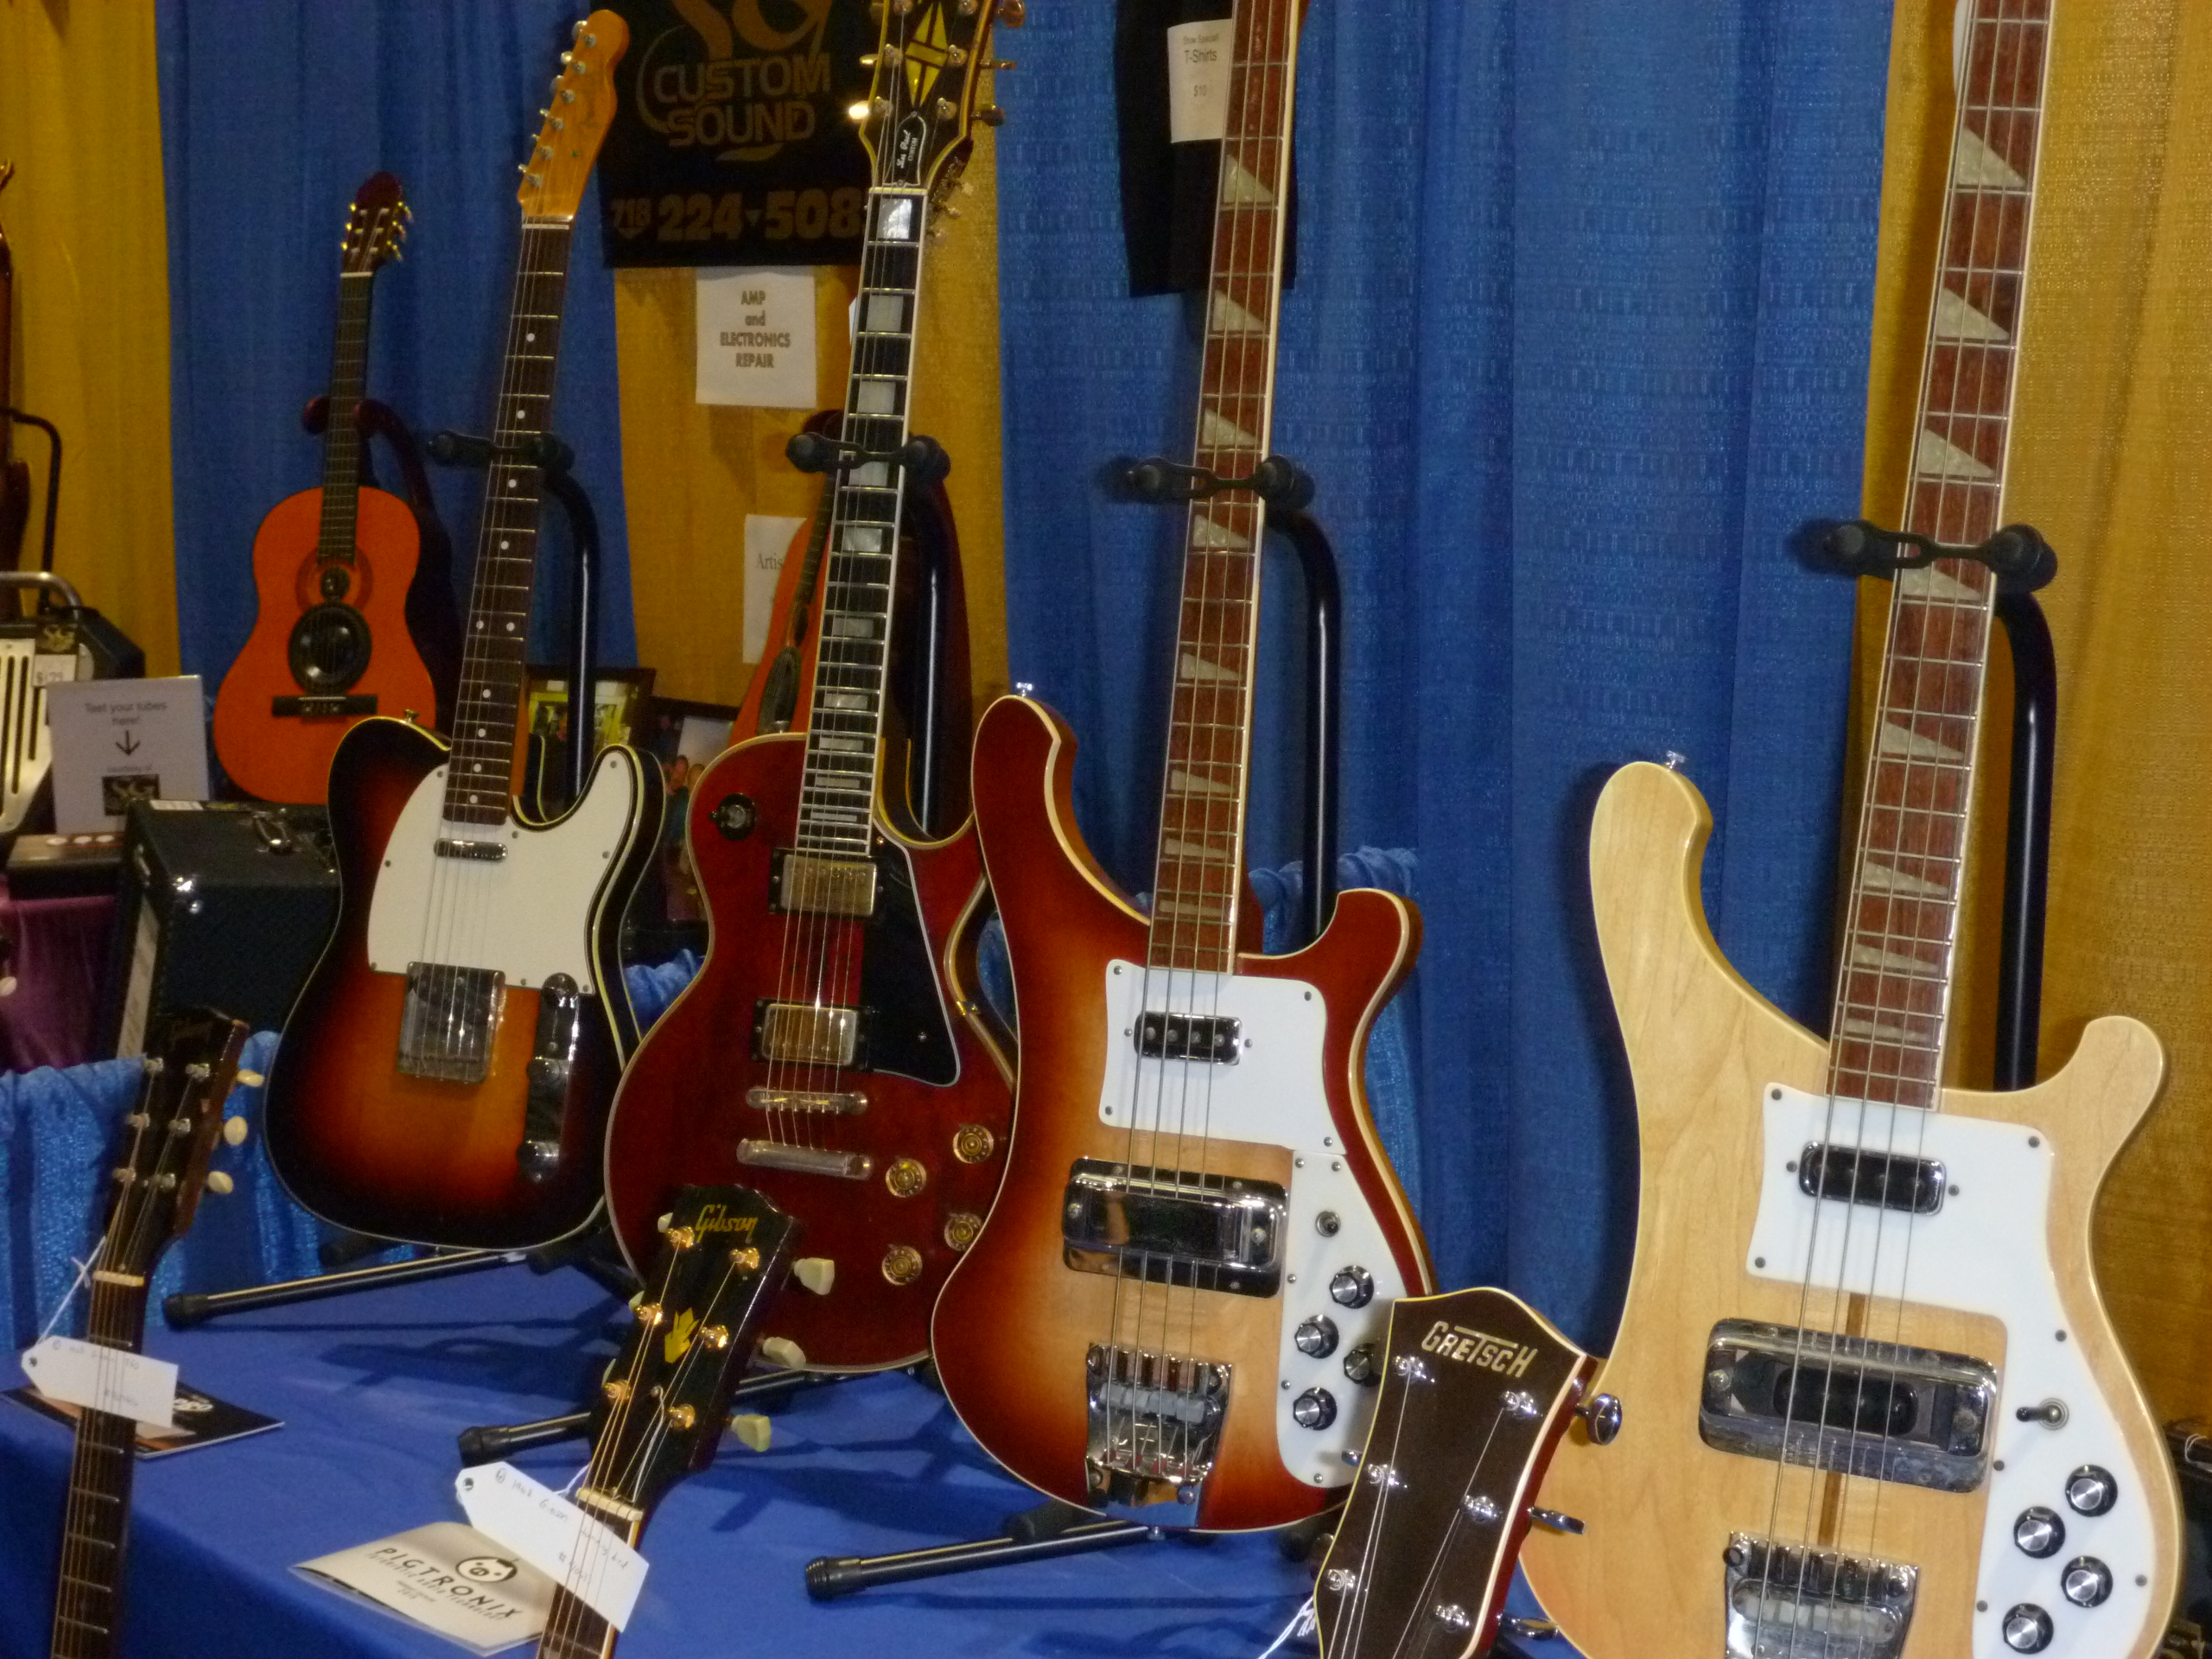 Basses and guitars were fully represented at NY Guitar Show.